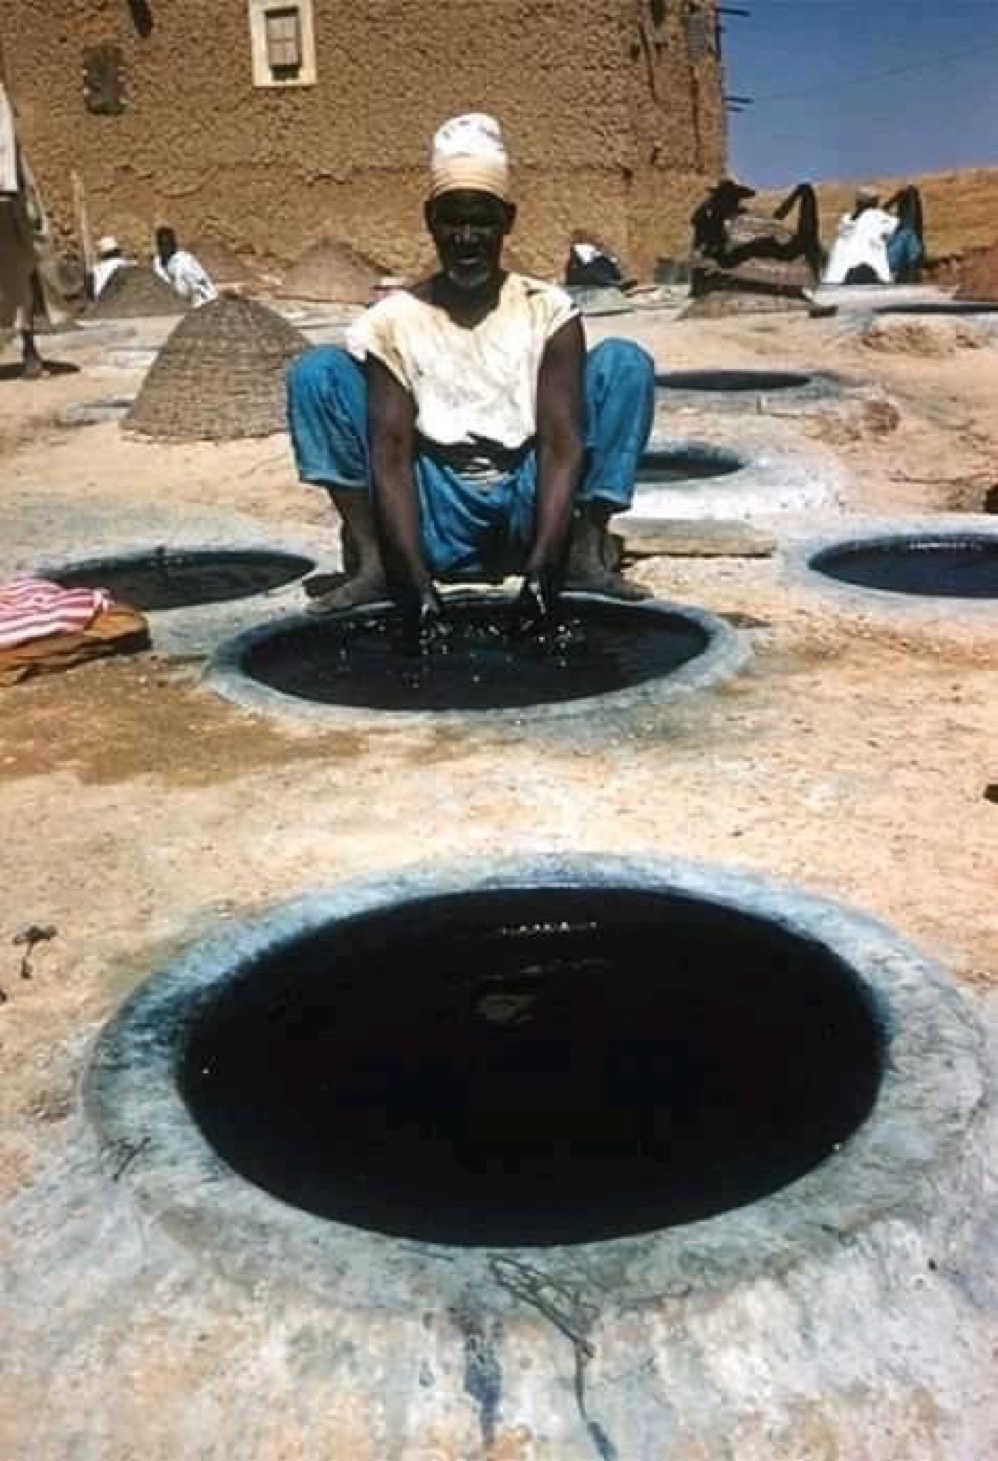 Nigeria Stories on X: The 125 Kofar Mata Dye Pits that were dug